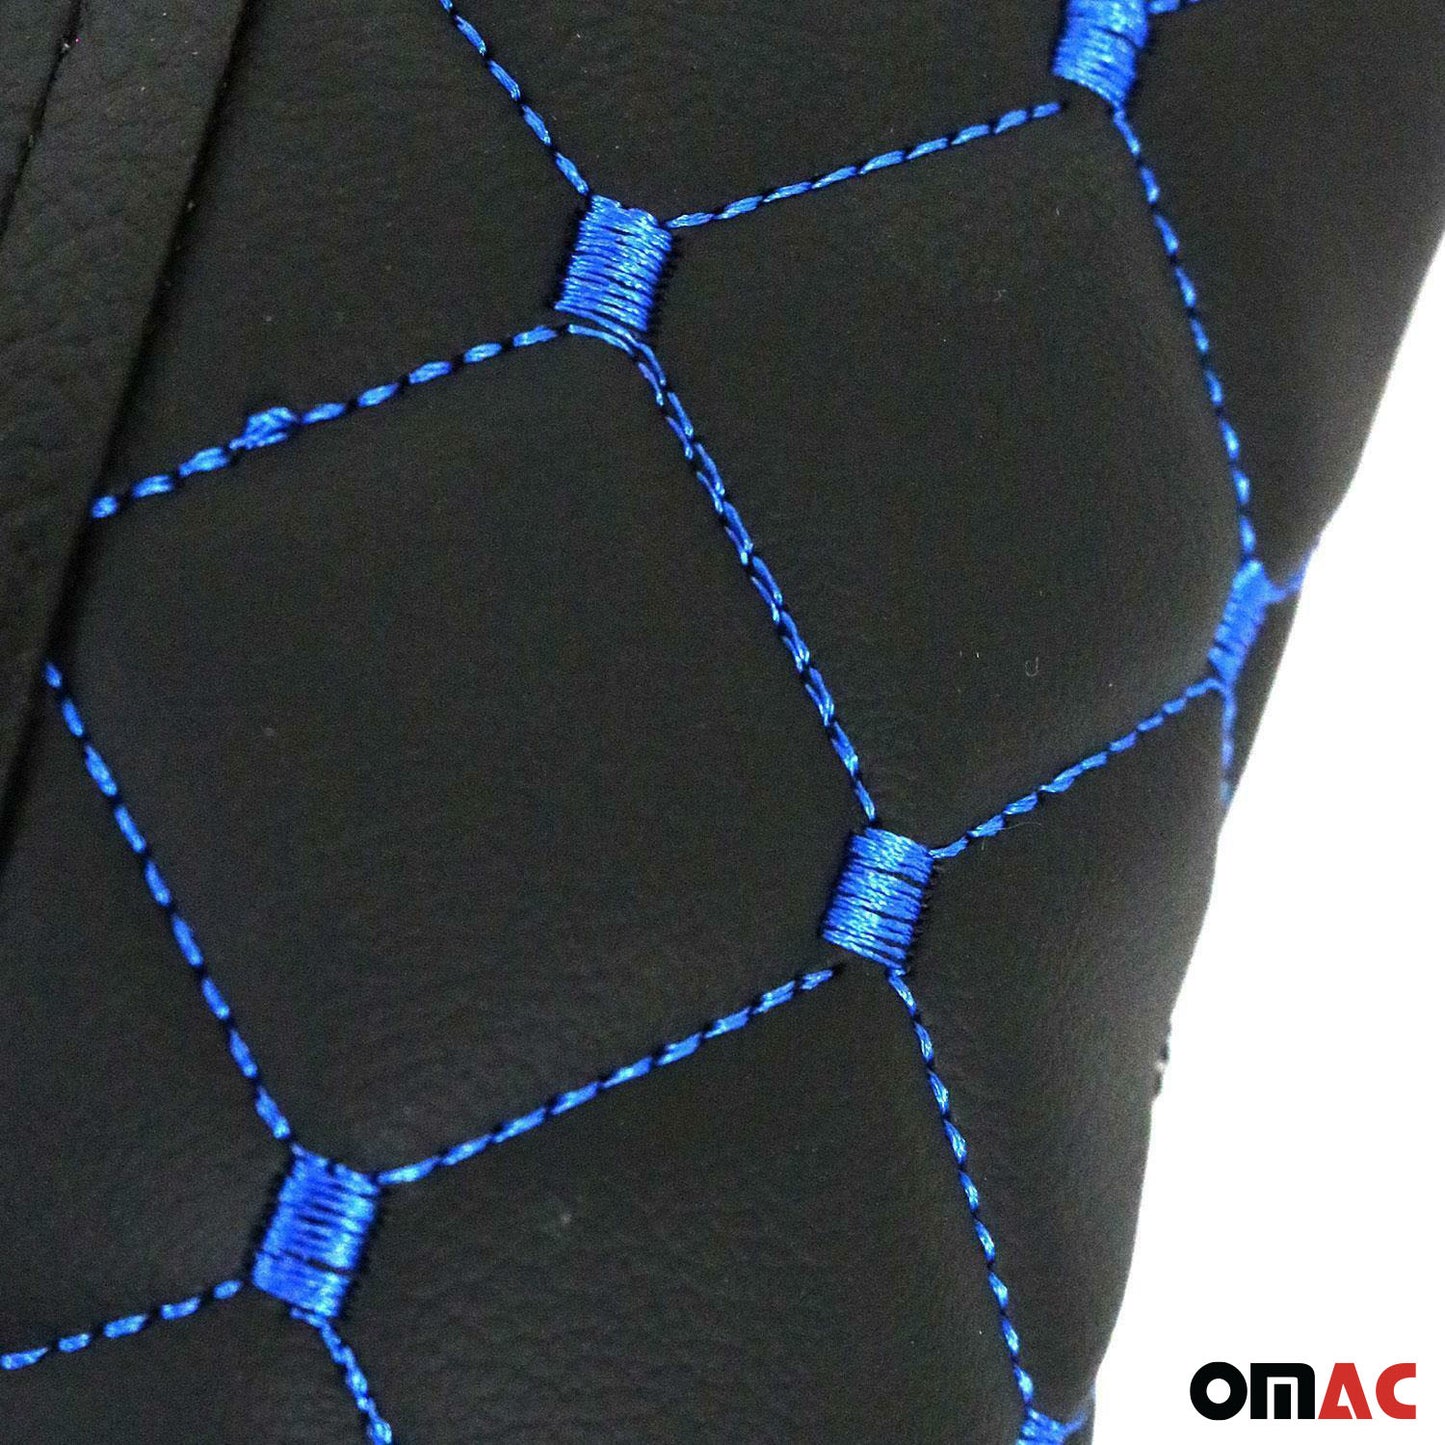 OMAC 2x Car Seat Neck Pillow Head Shoulder Rest Pad Black with Blue PU Leather SET96322-MS1